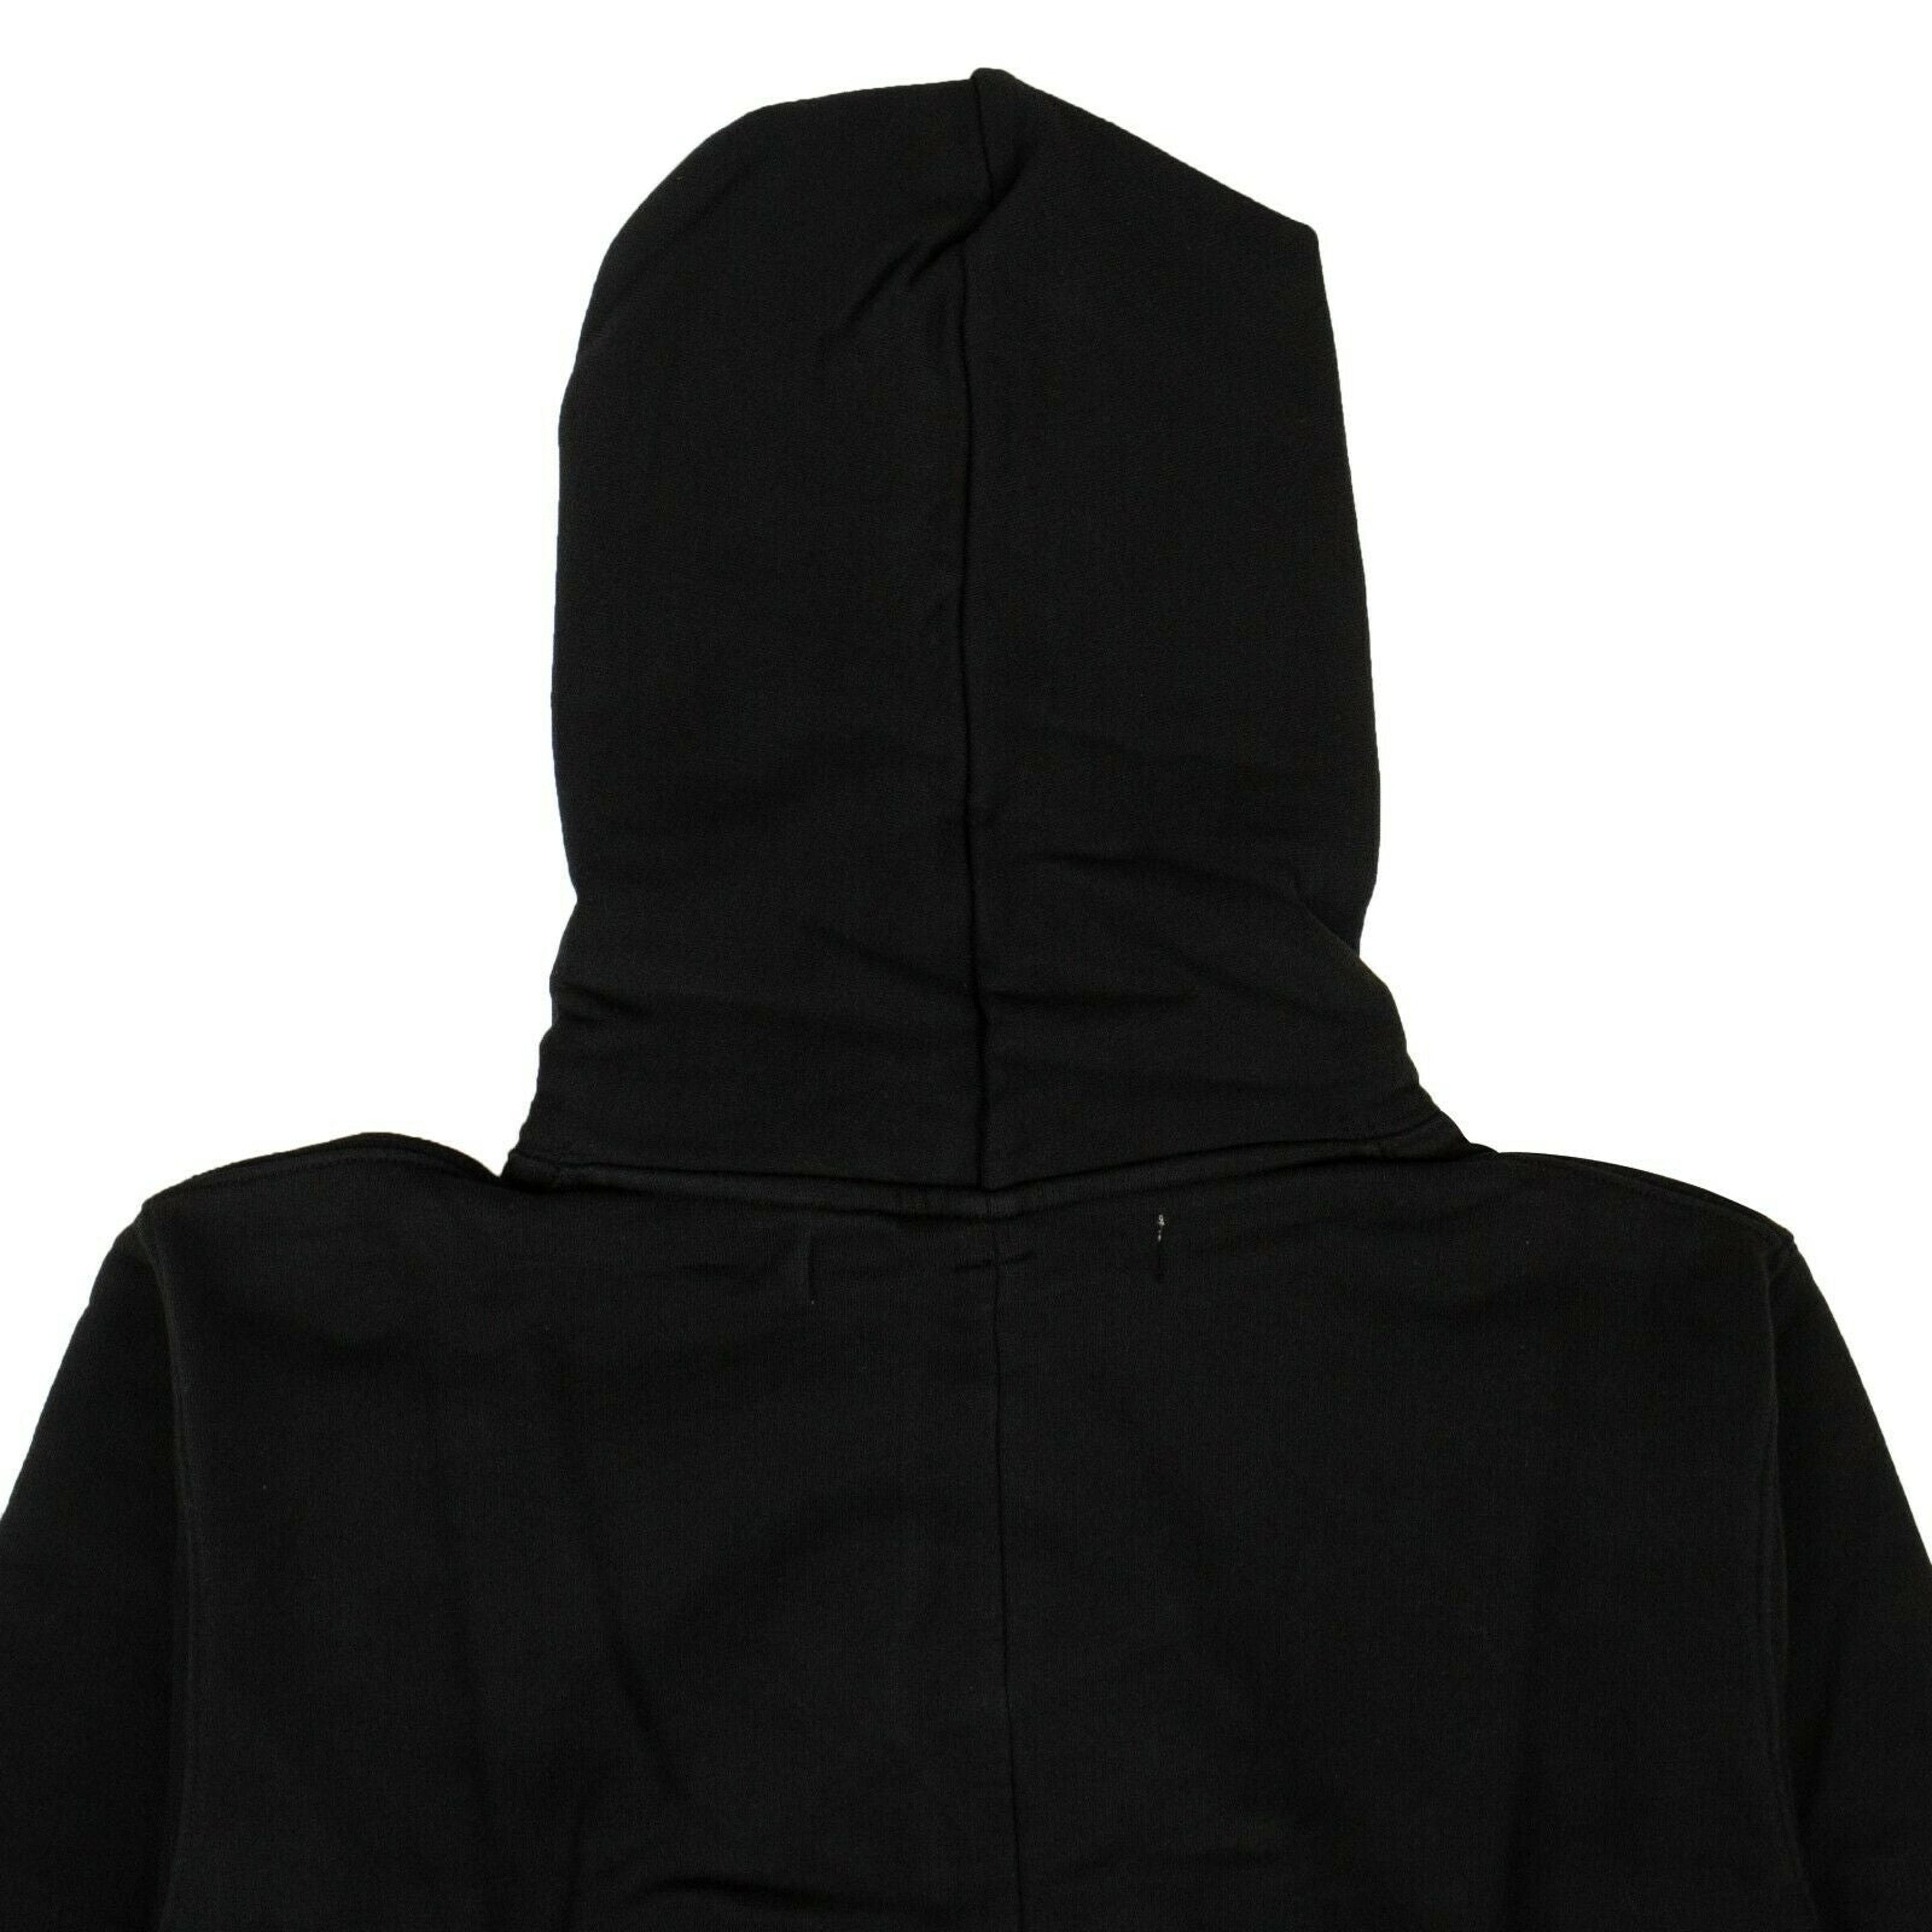 Alternate View 3 of Men's Black Cropped Sweatshirt